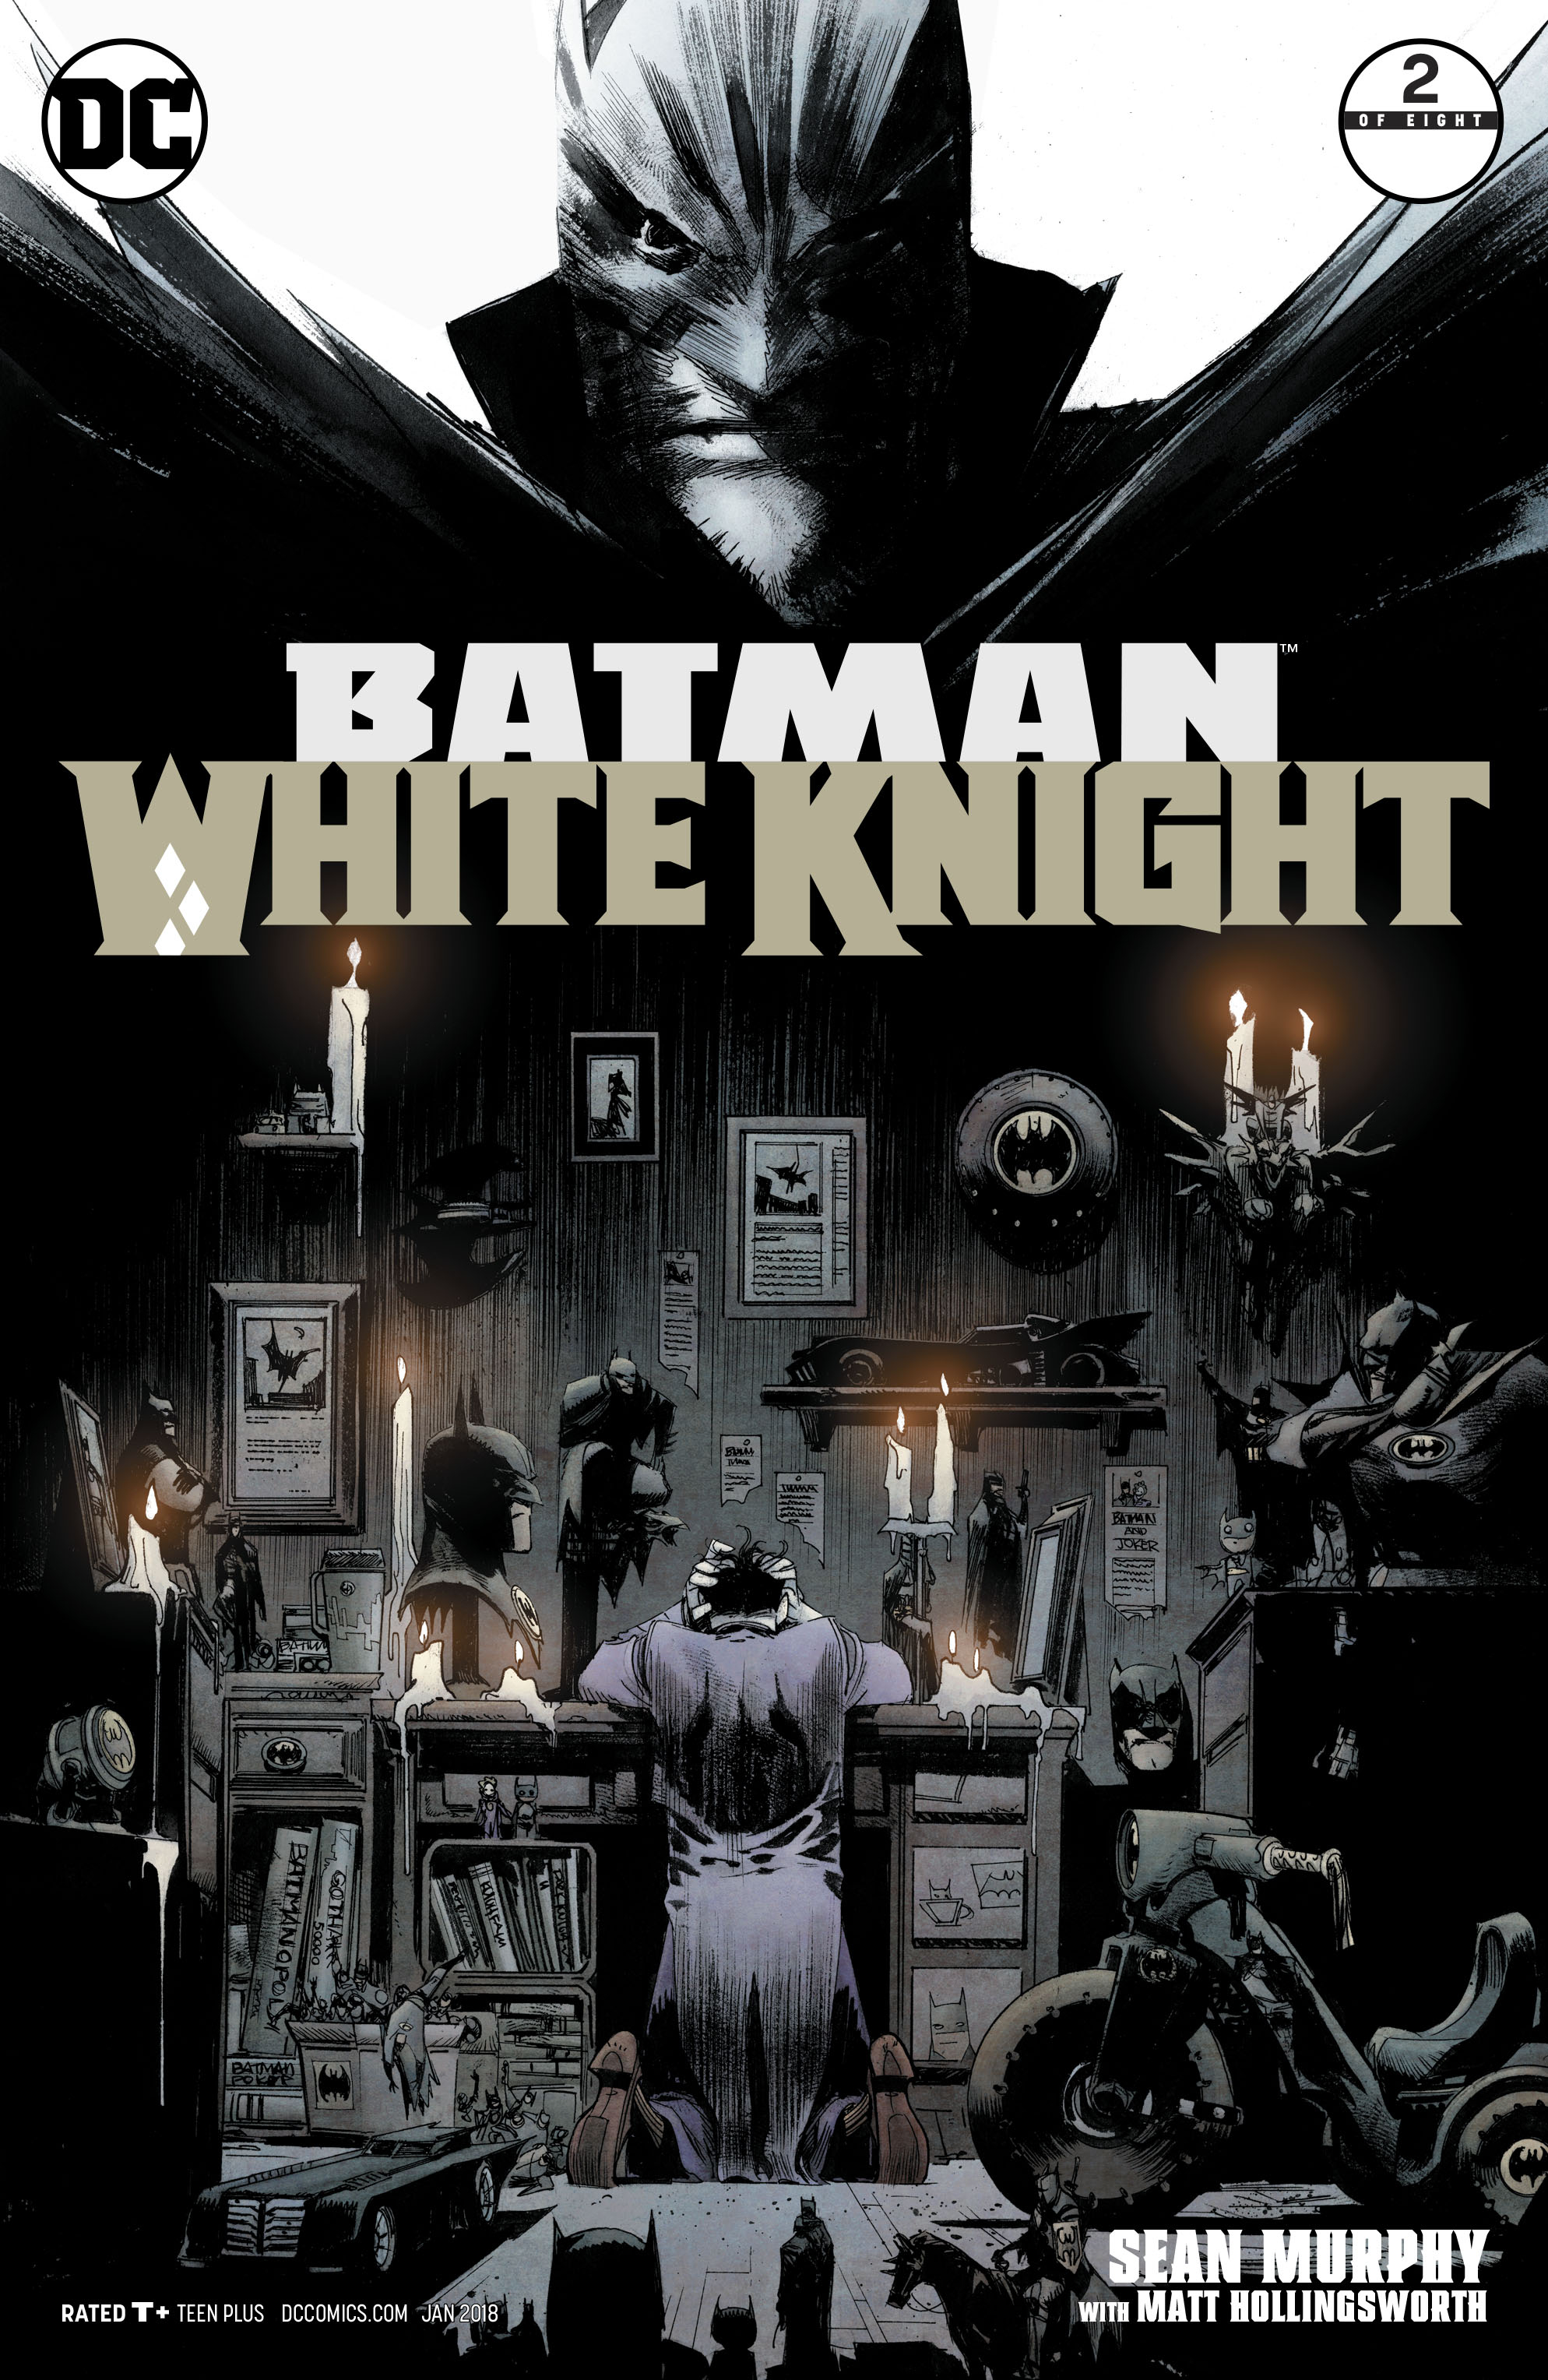 White batman. Бэтмен белый рыцарь комикс. Бэтмен белый рыцарь Готэма. Азбука Бэтмен: белый рыцарь. Бэтмен белый рыцарь обложка.